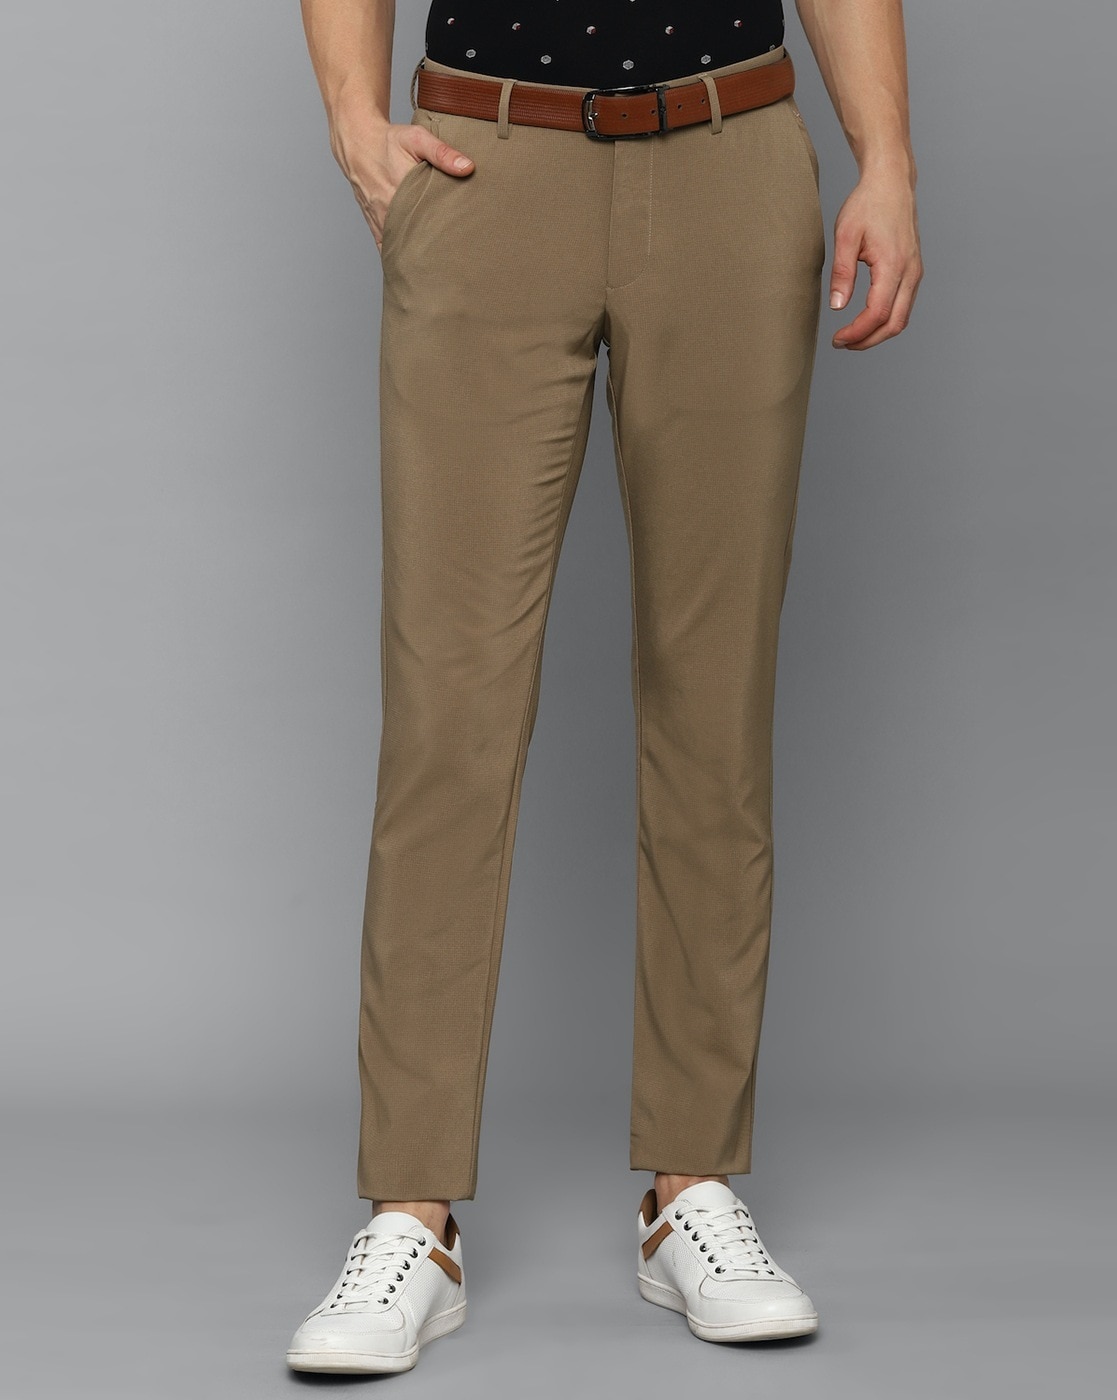 Buy Men Cream Slim Fit Solid Casual Trousers Online - 890163 | Allen Solly